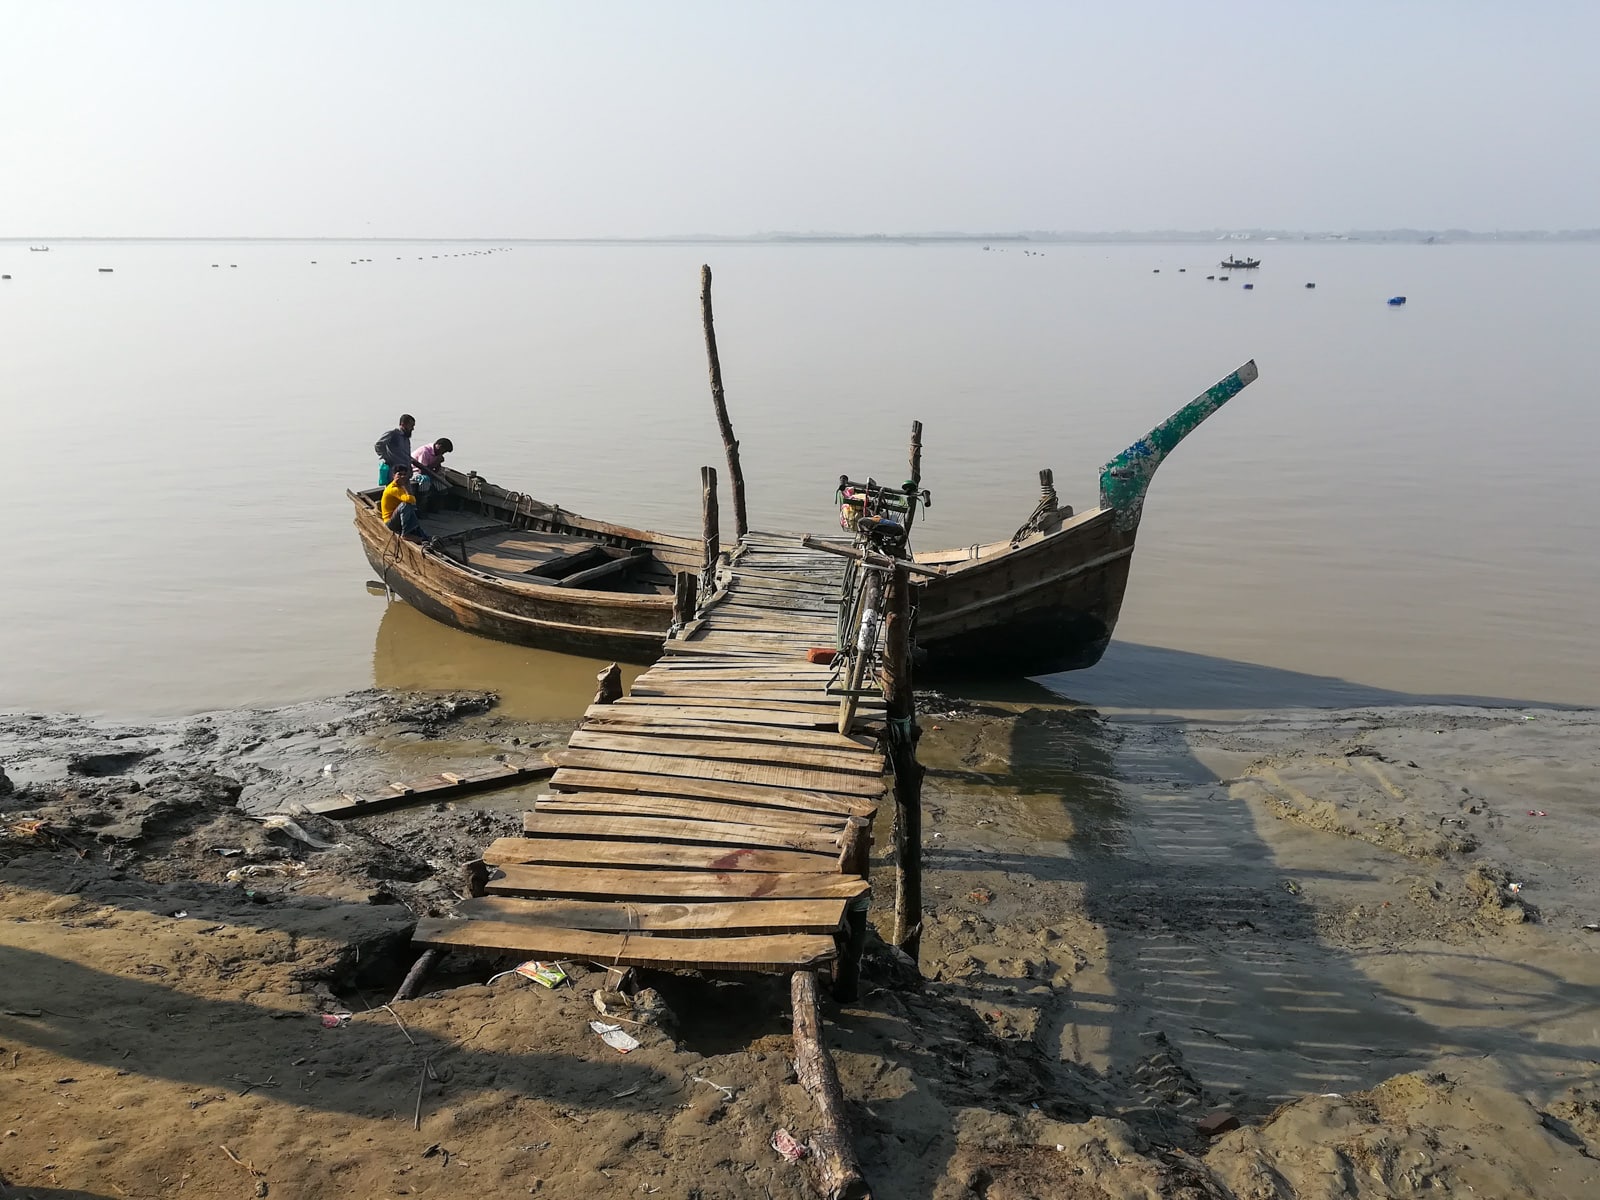 Travel guide to Nijhum Dwip island, Bangladesh - Ferry boat to Nijhum Dwip without people - Lost With Purpose travel blog